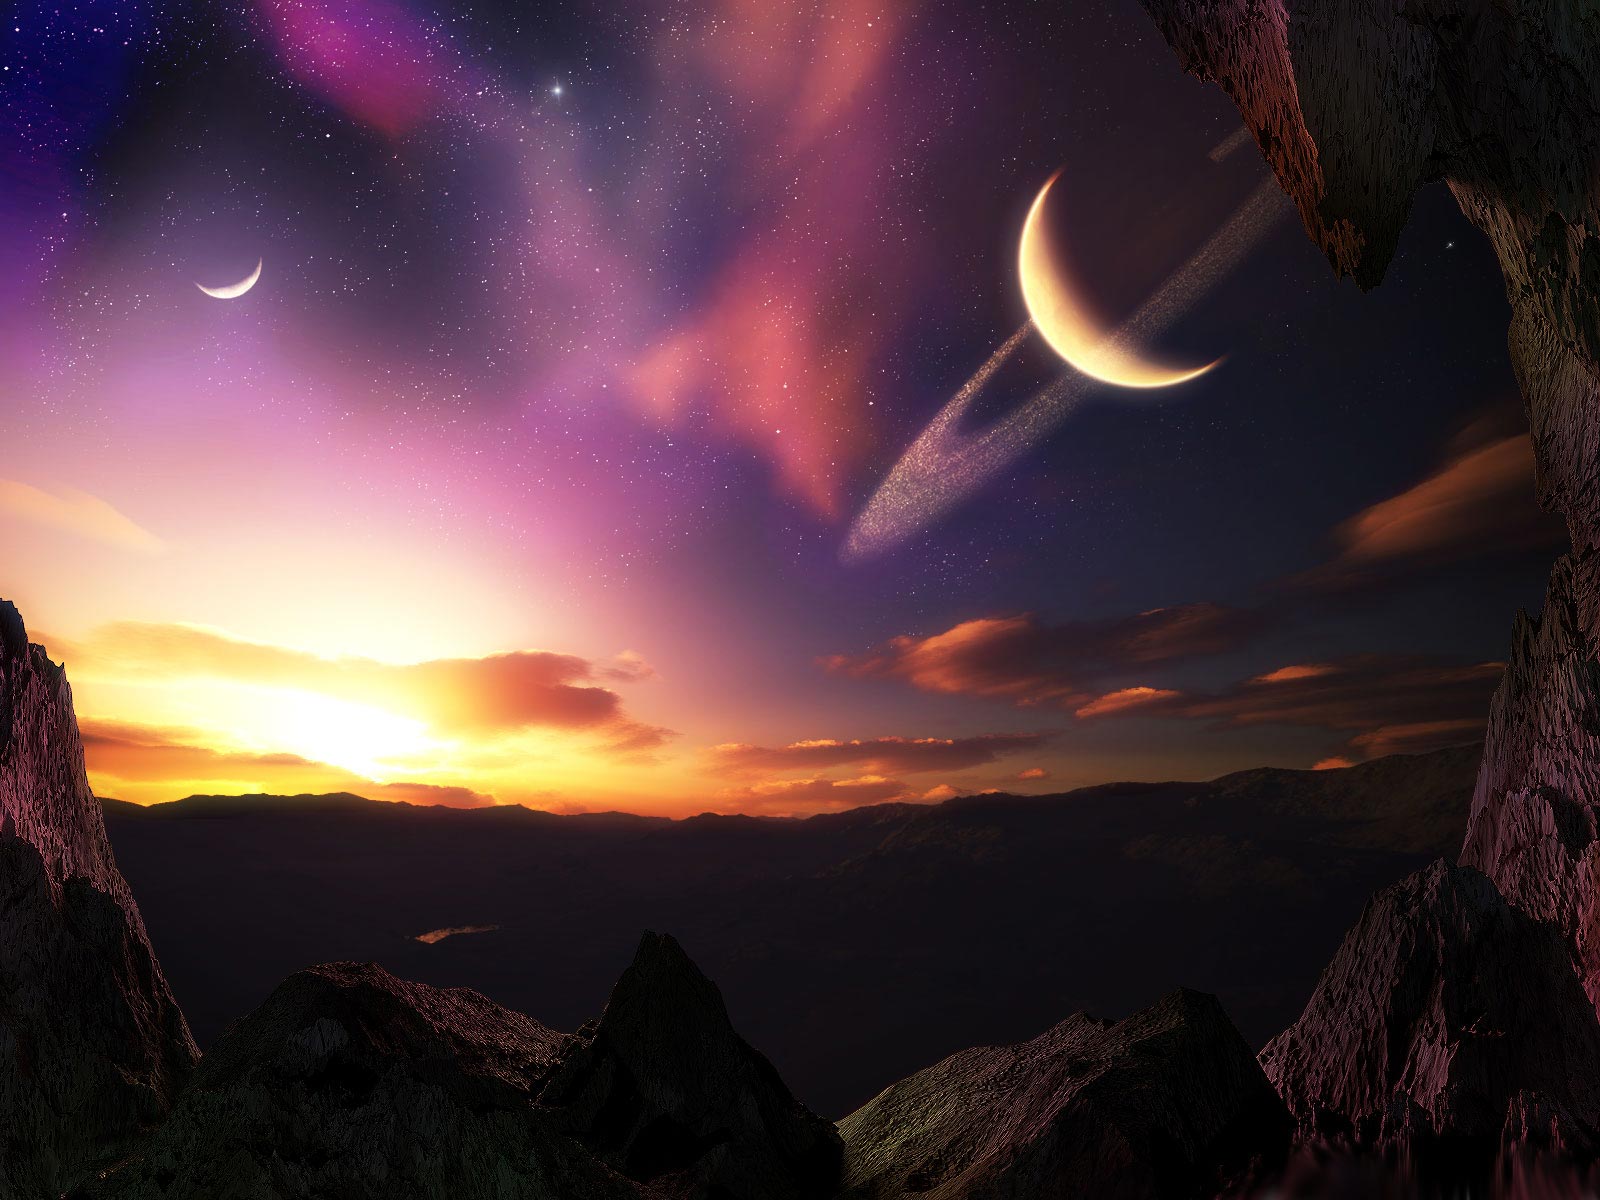 Art Science Fiction Alien Landscapes Moons Wallpaper Background